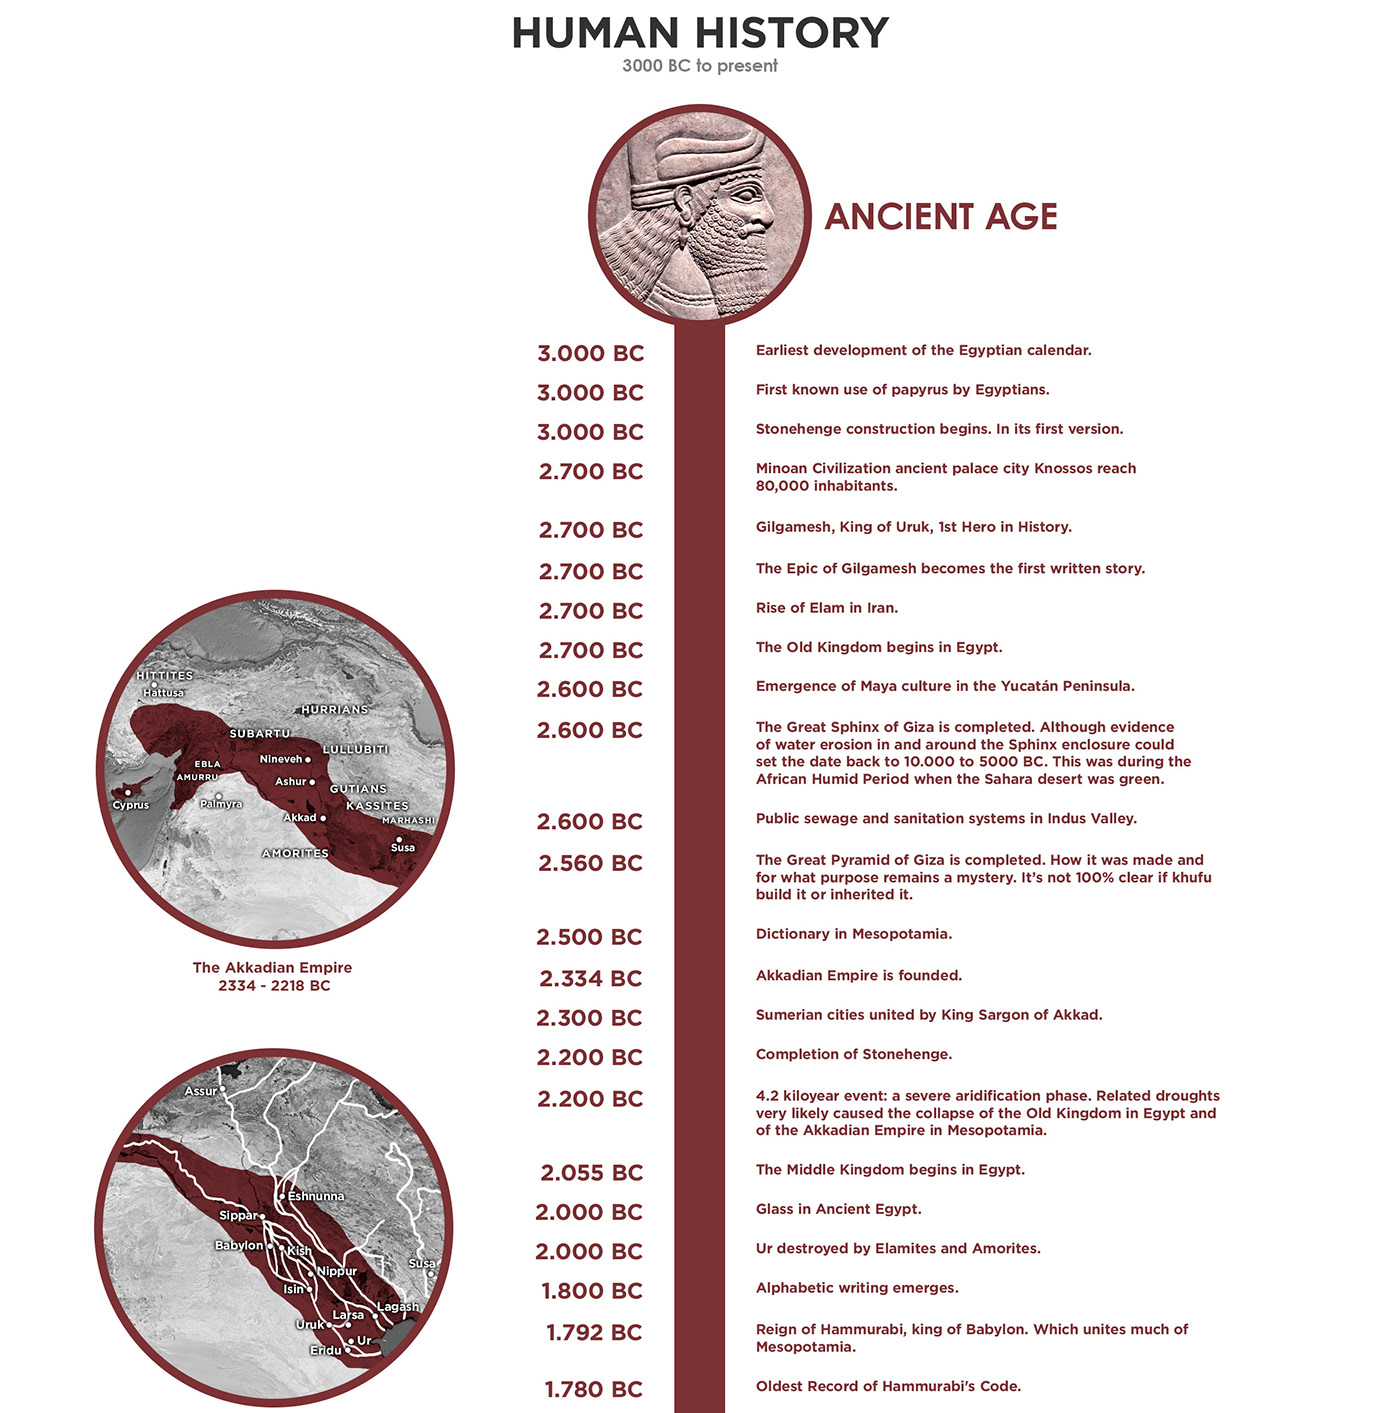 Human History Timeline Alexander the Great historical history leonardo da vinci medieval napoleon Renaissance viking samurai